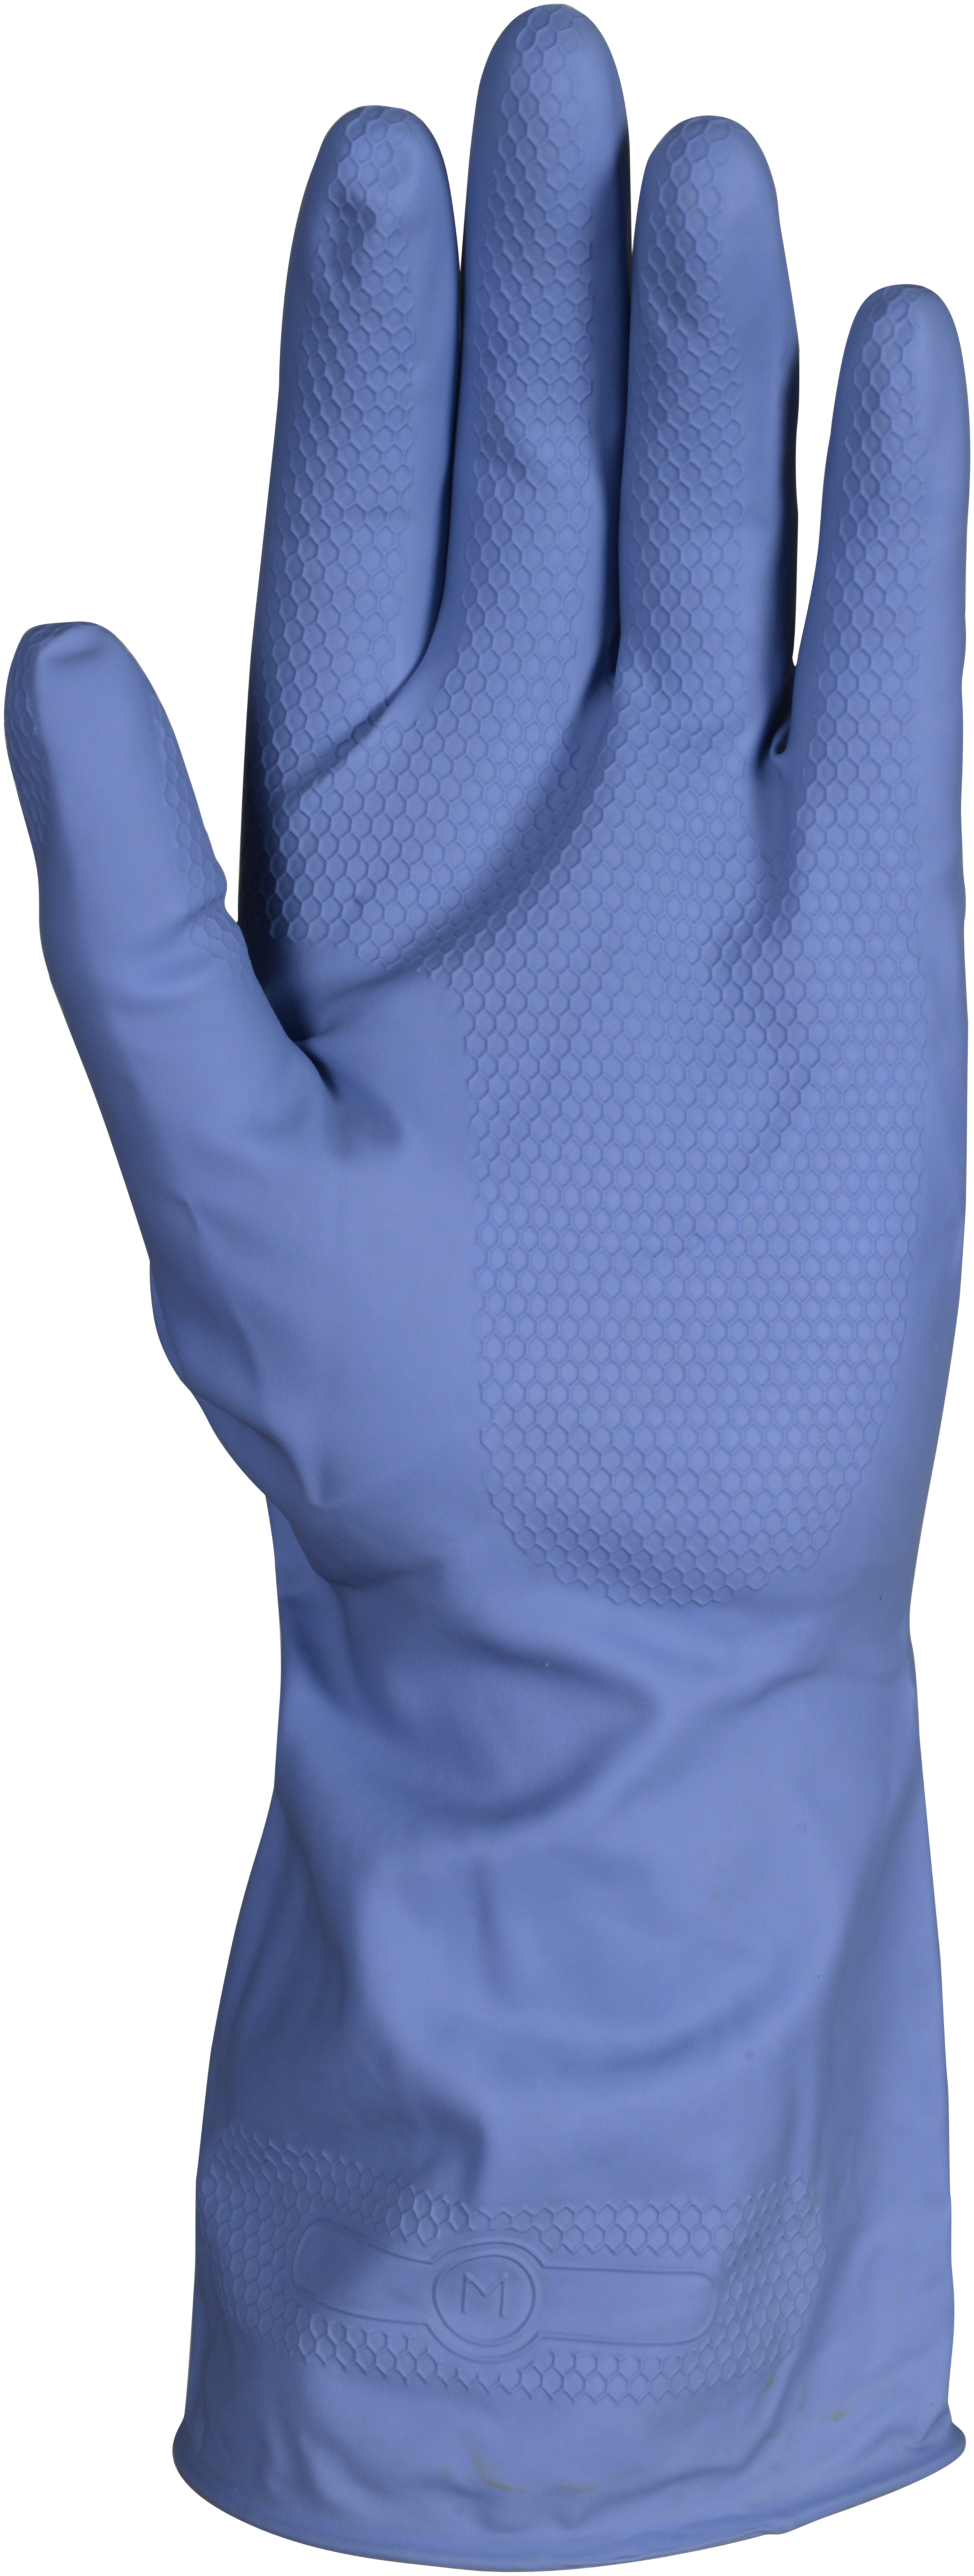 Handschuh Latex Multipurpose blau Gr.S